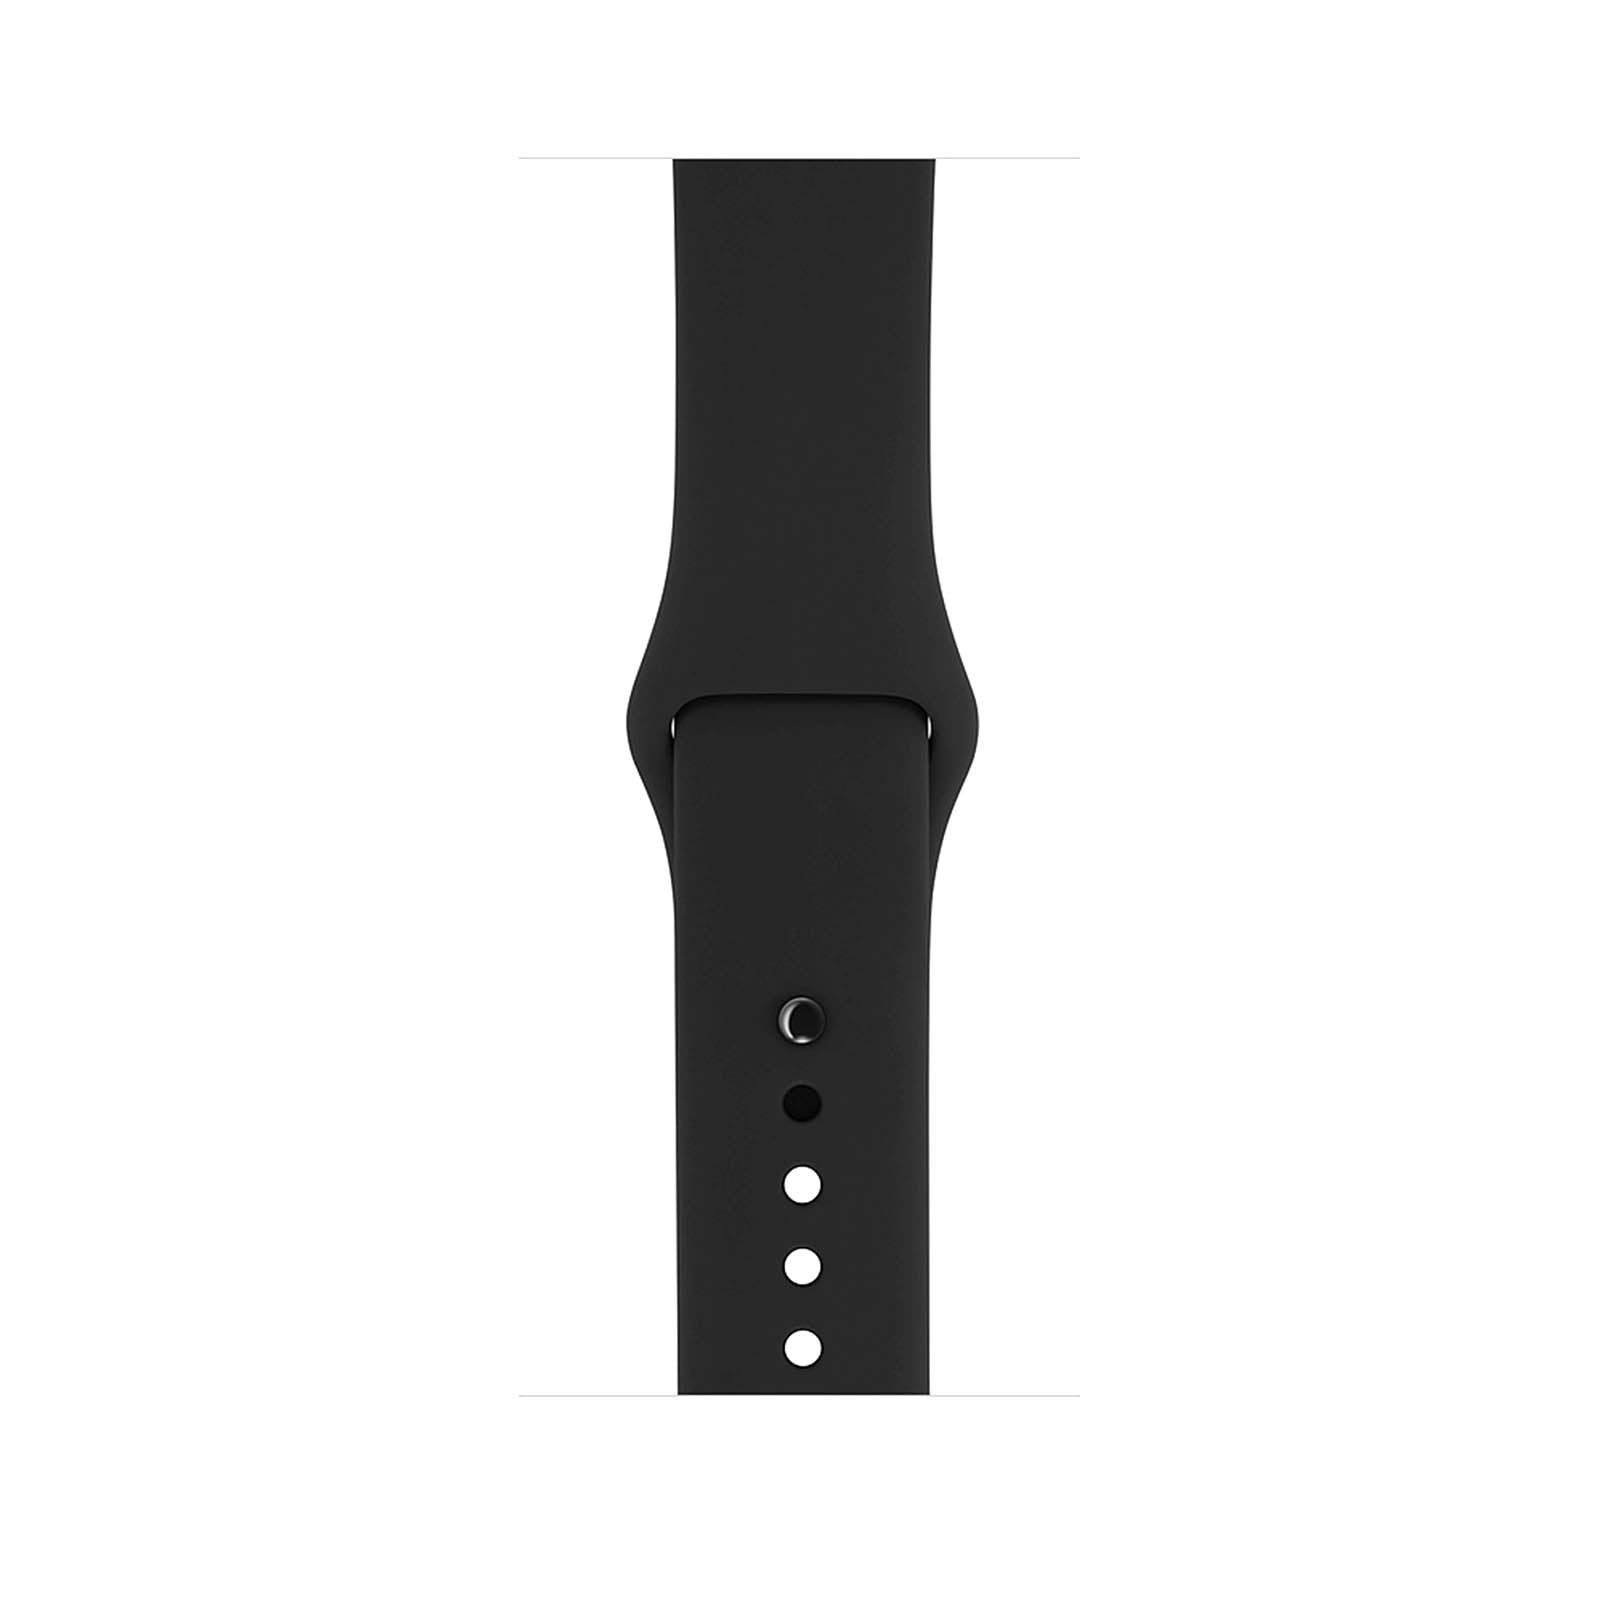 Apple Watch Series 5 Stainless 44mm Black Good - WiFi